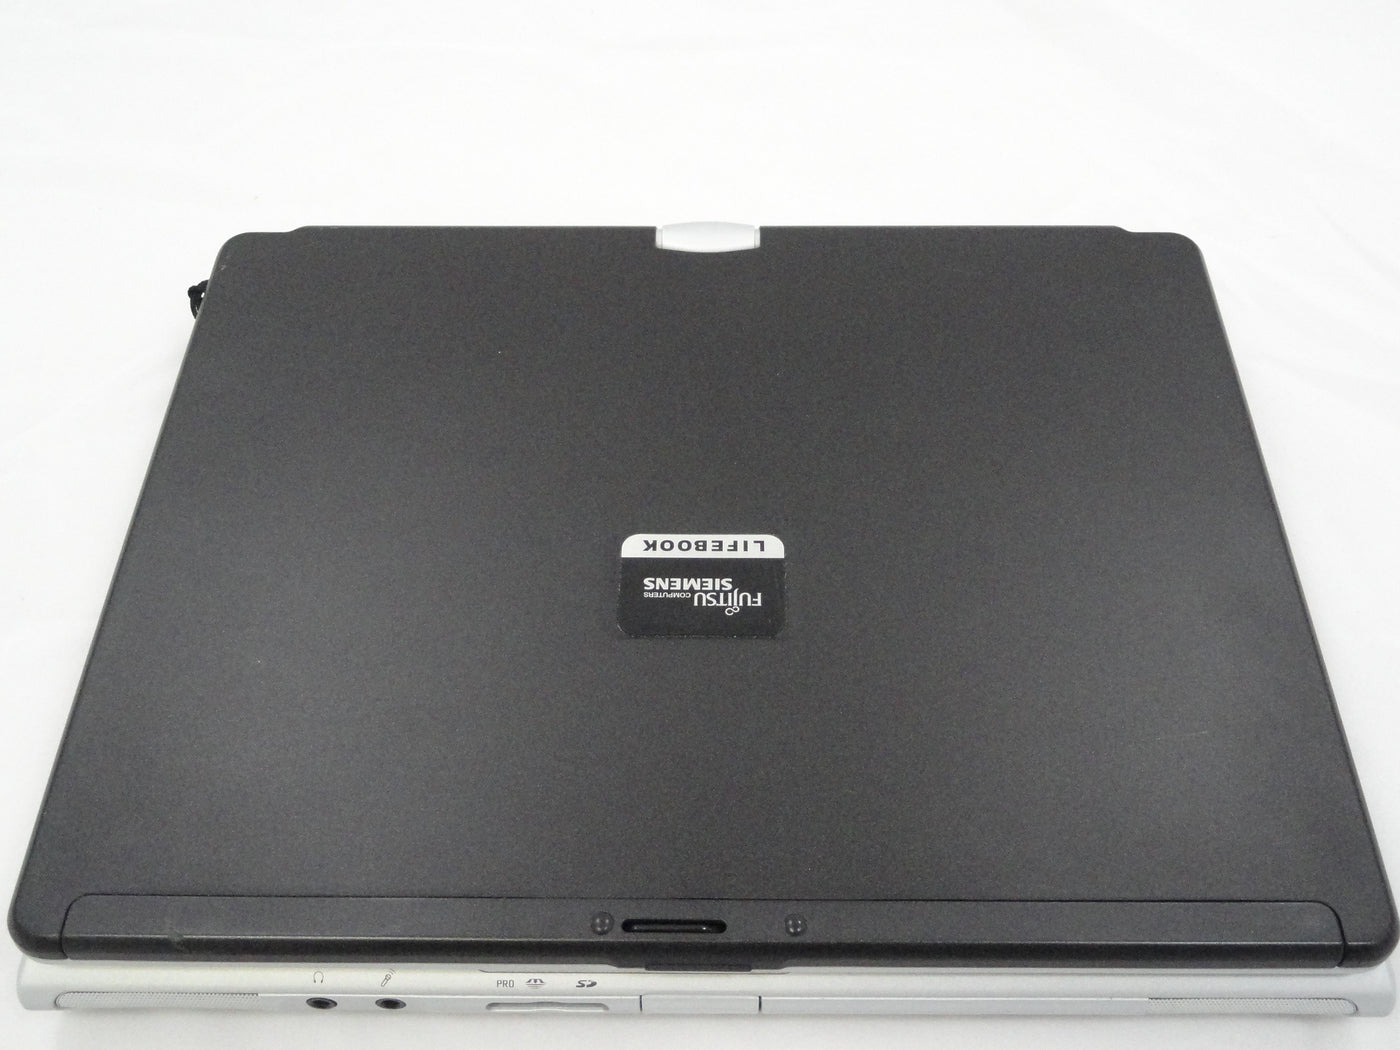 PR05907_T2410_Fujitsu LifeBook T Series Tablet PC T4210 - Image2